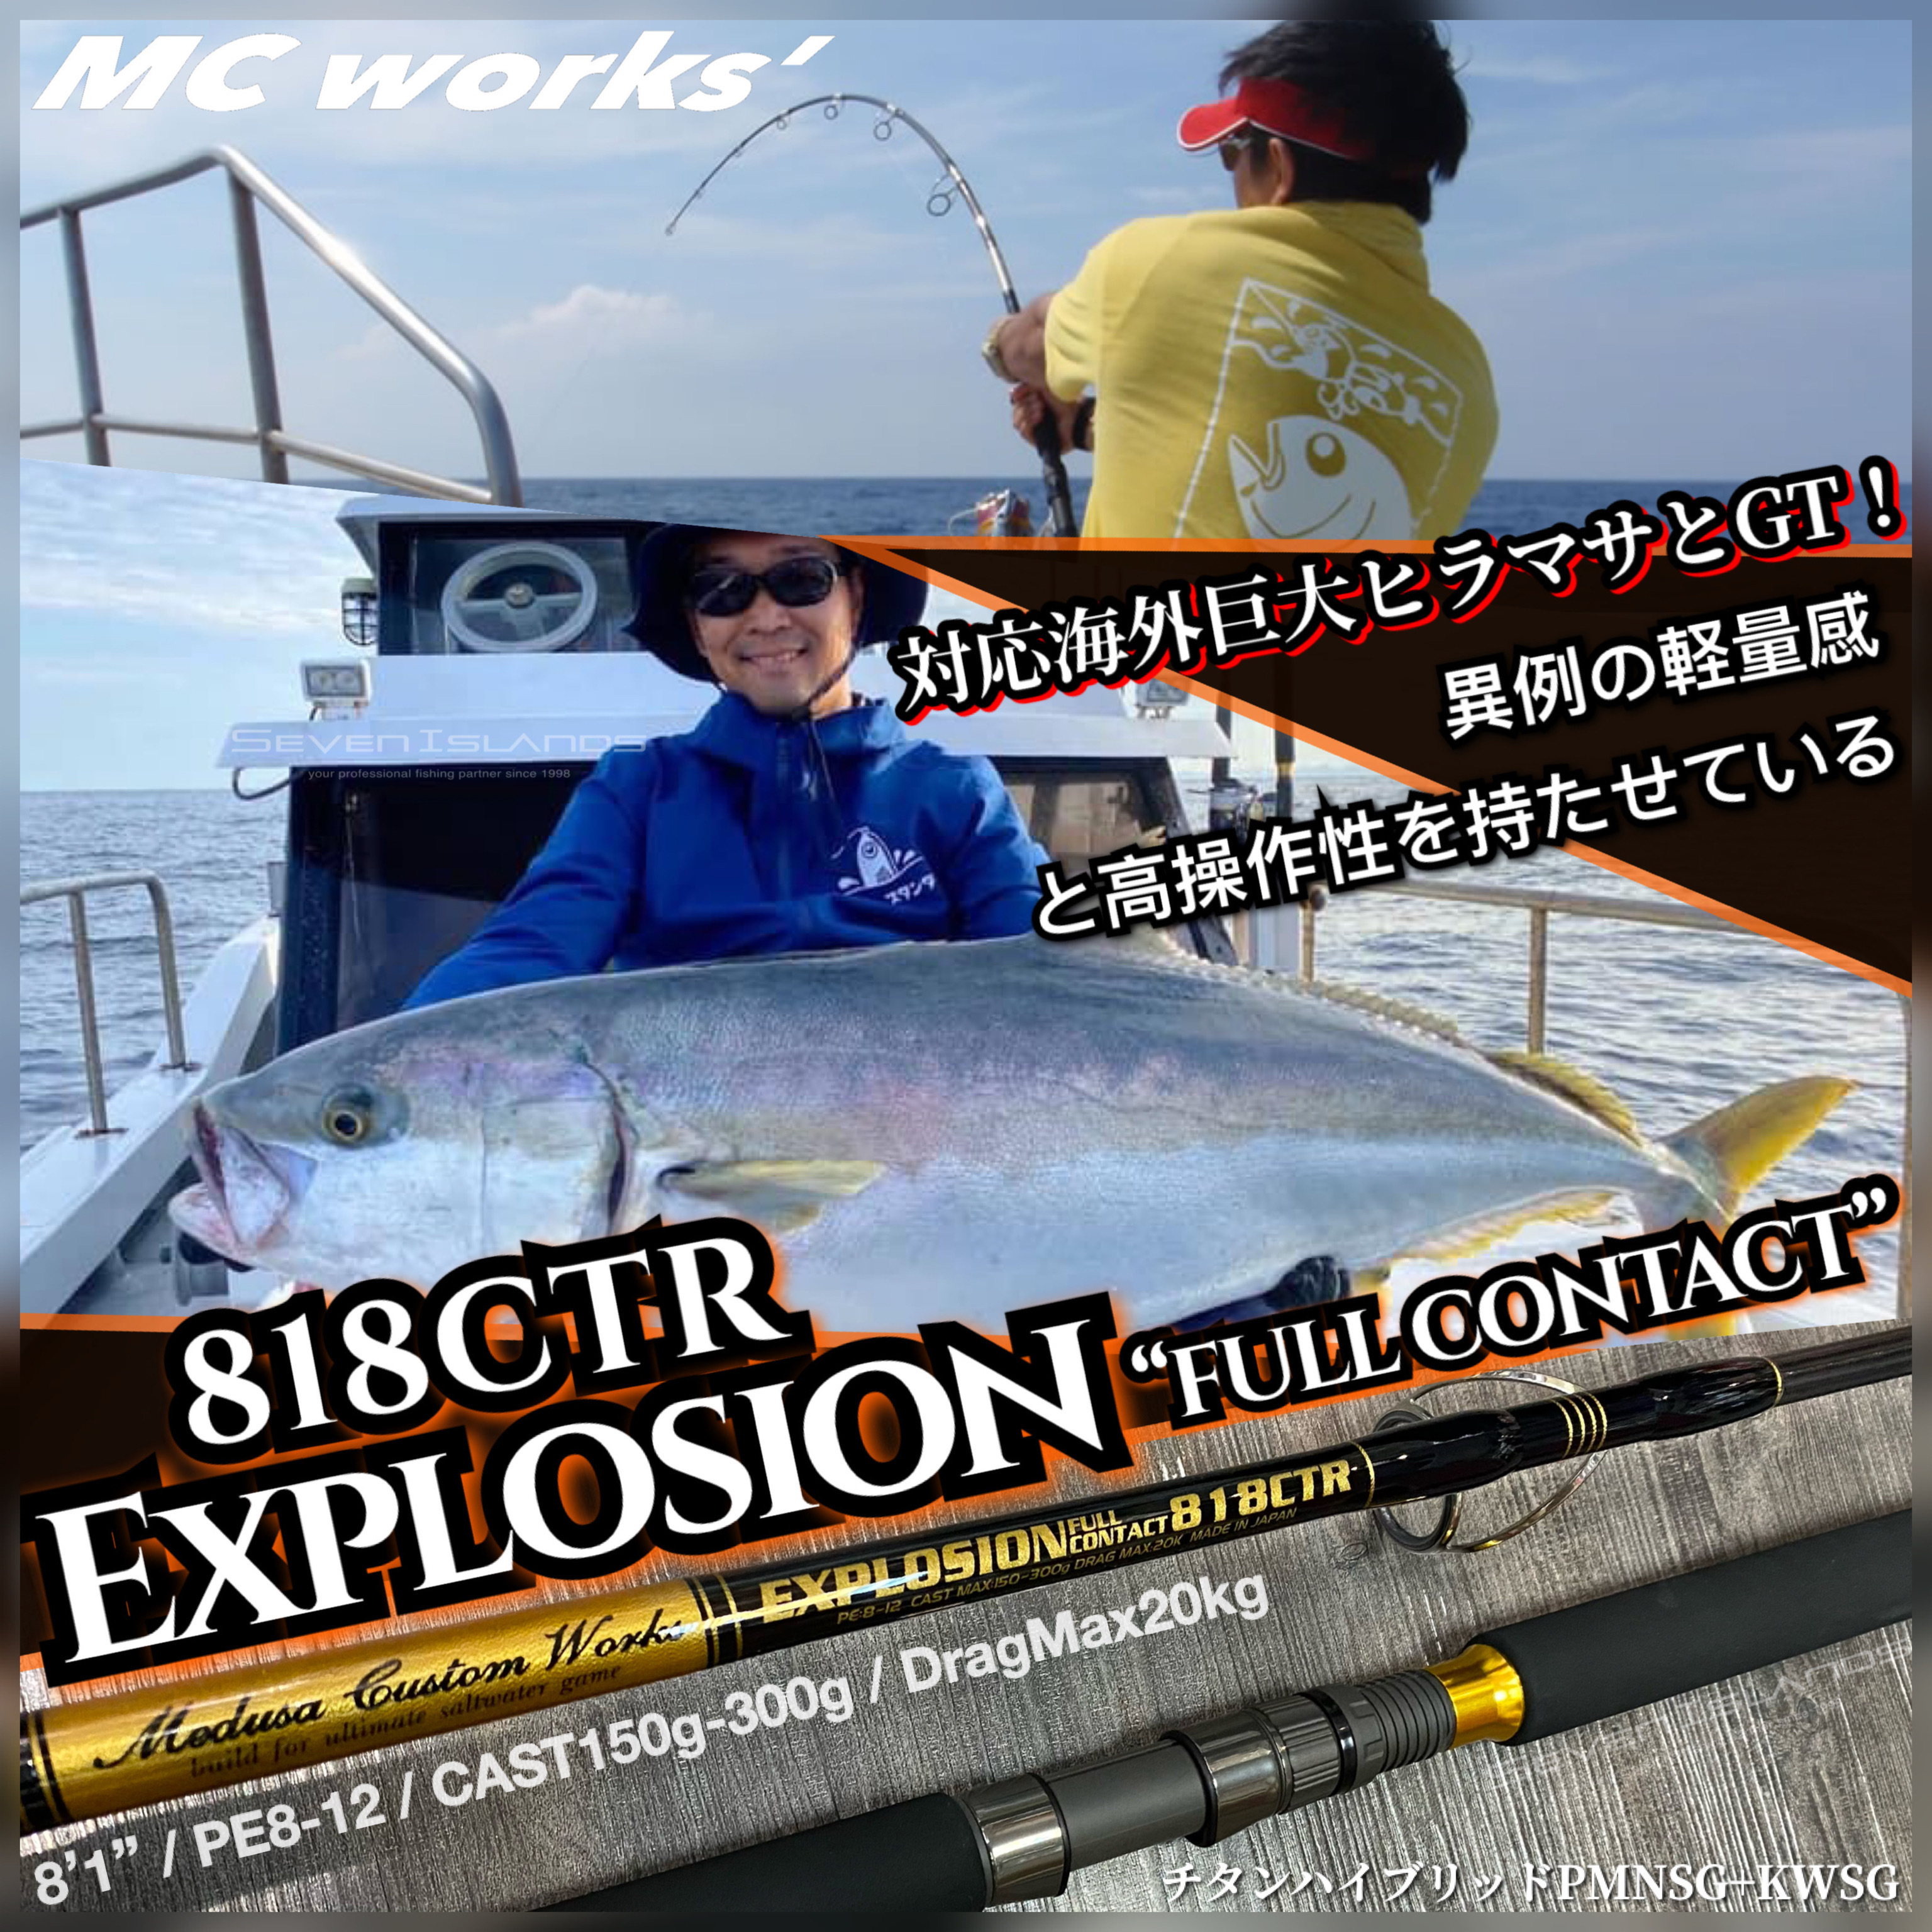 MC WORKS' EXPLOSION 818CTR CASTING ROD